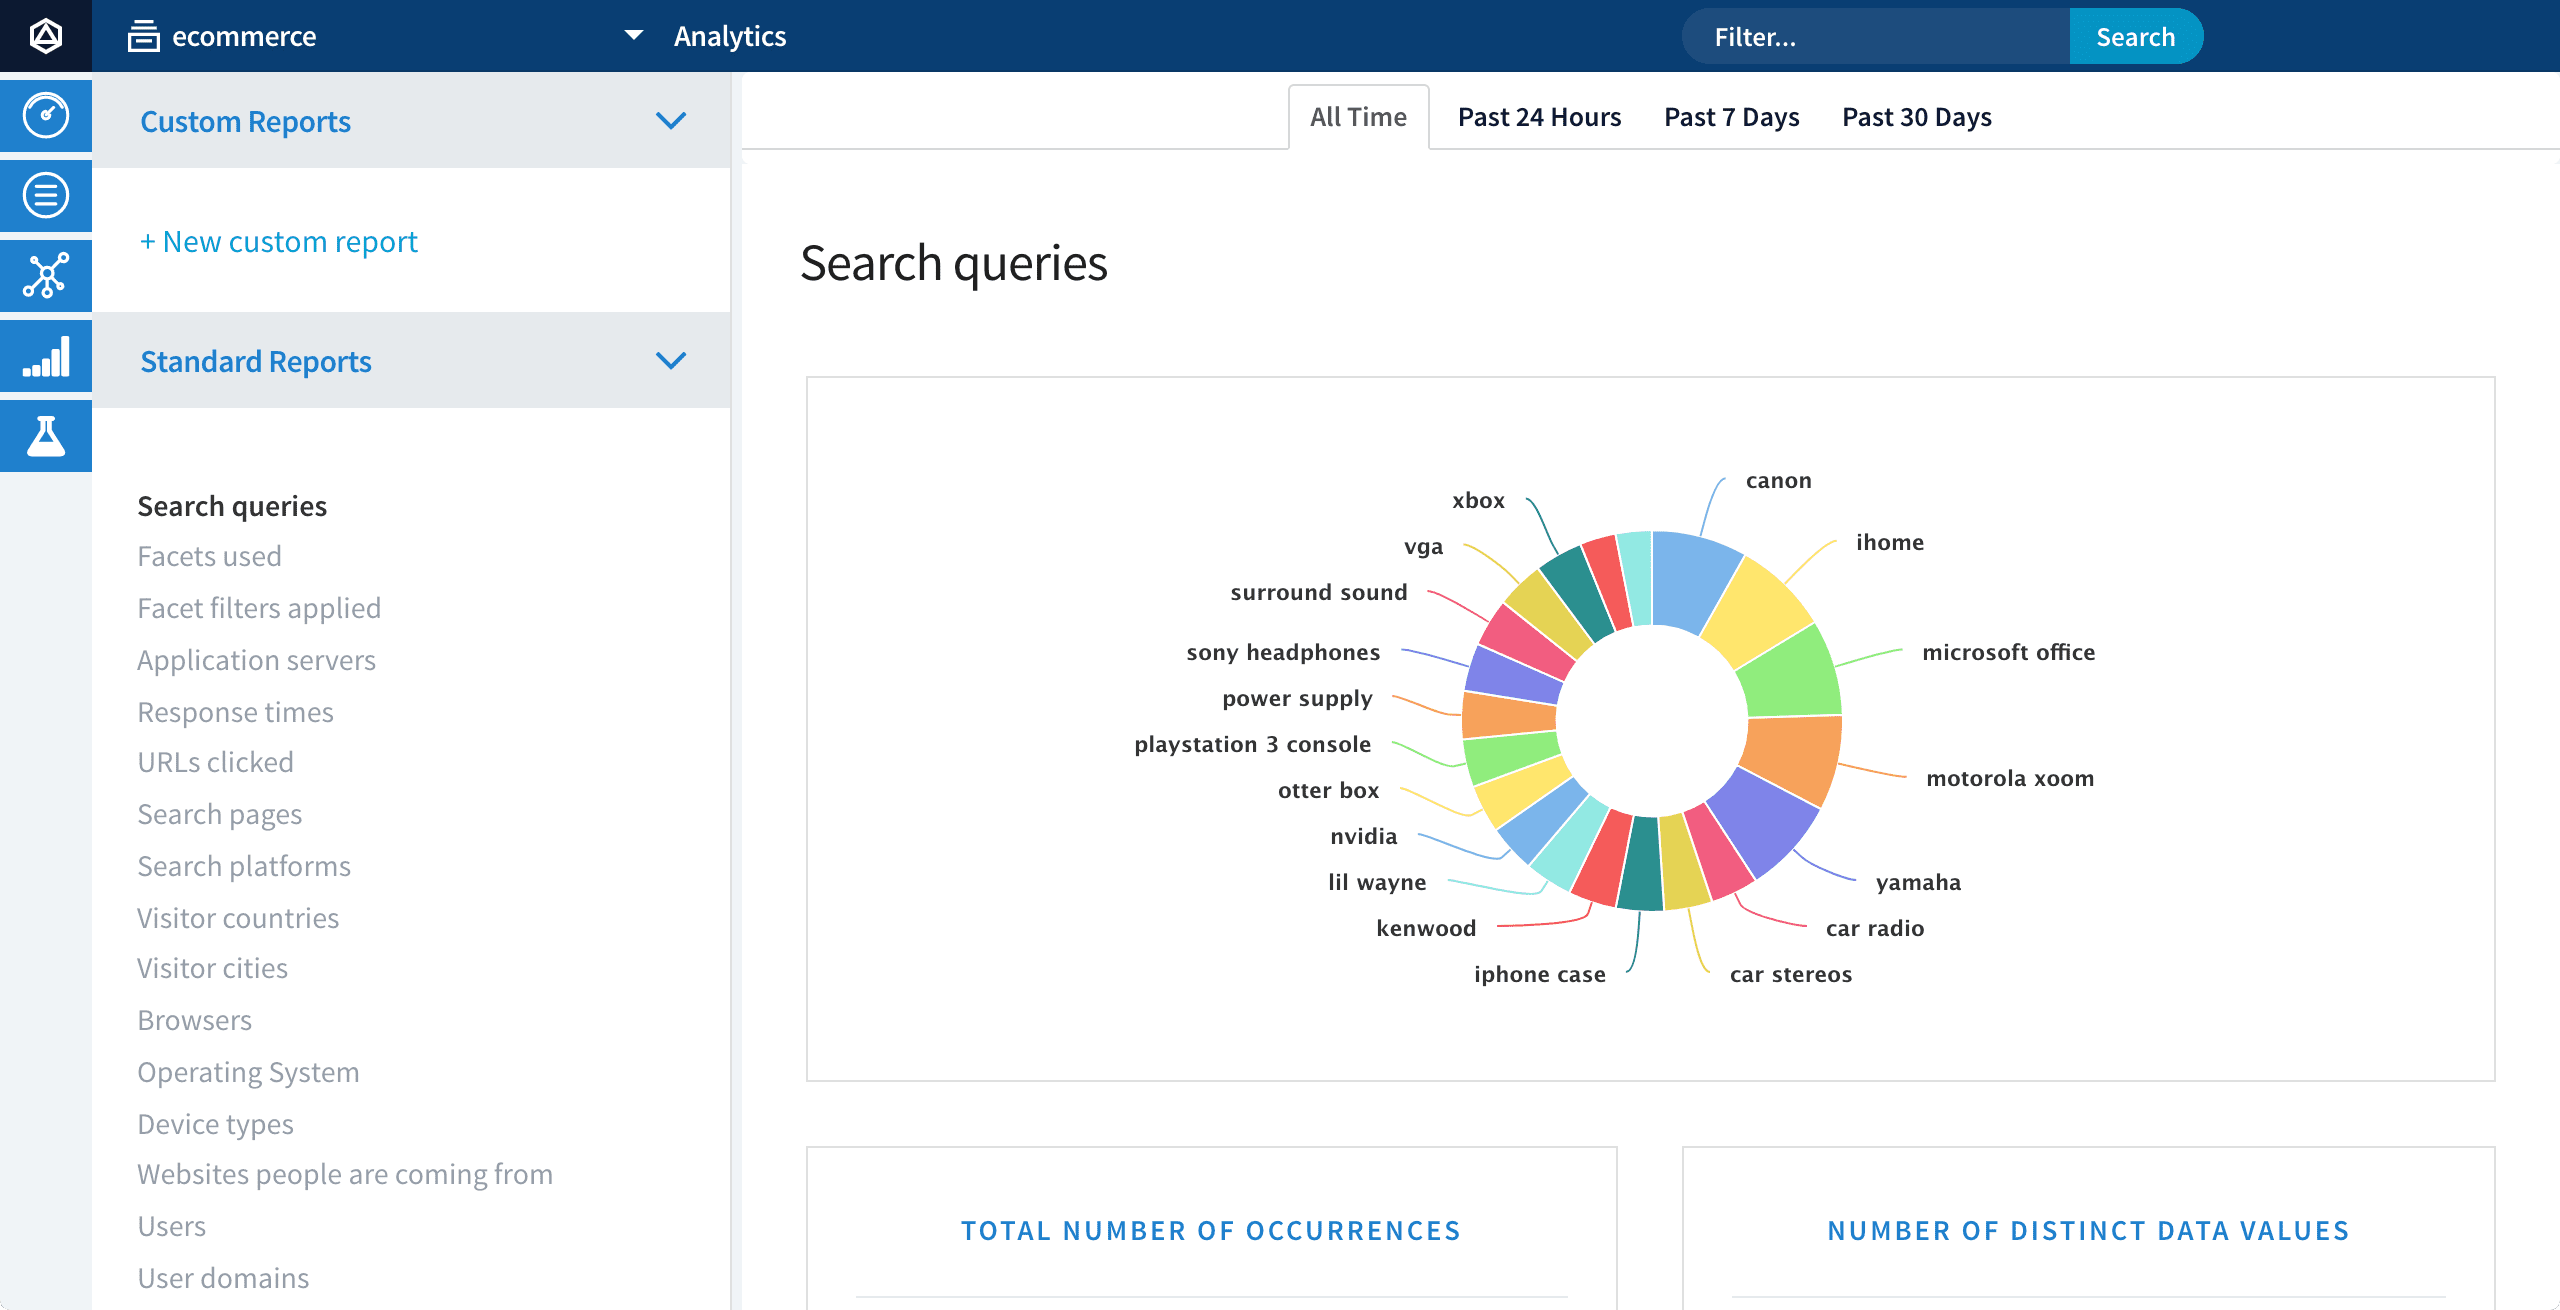 Analytics page